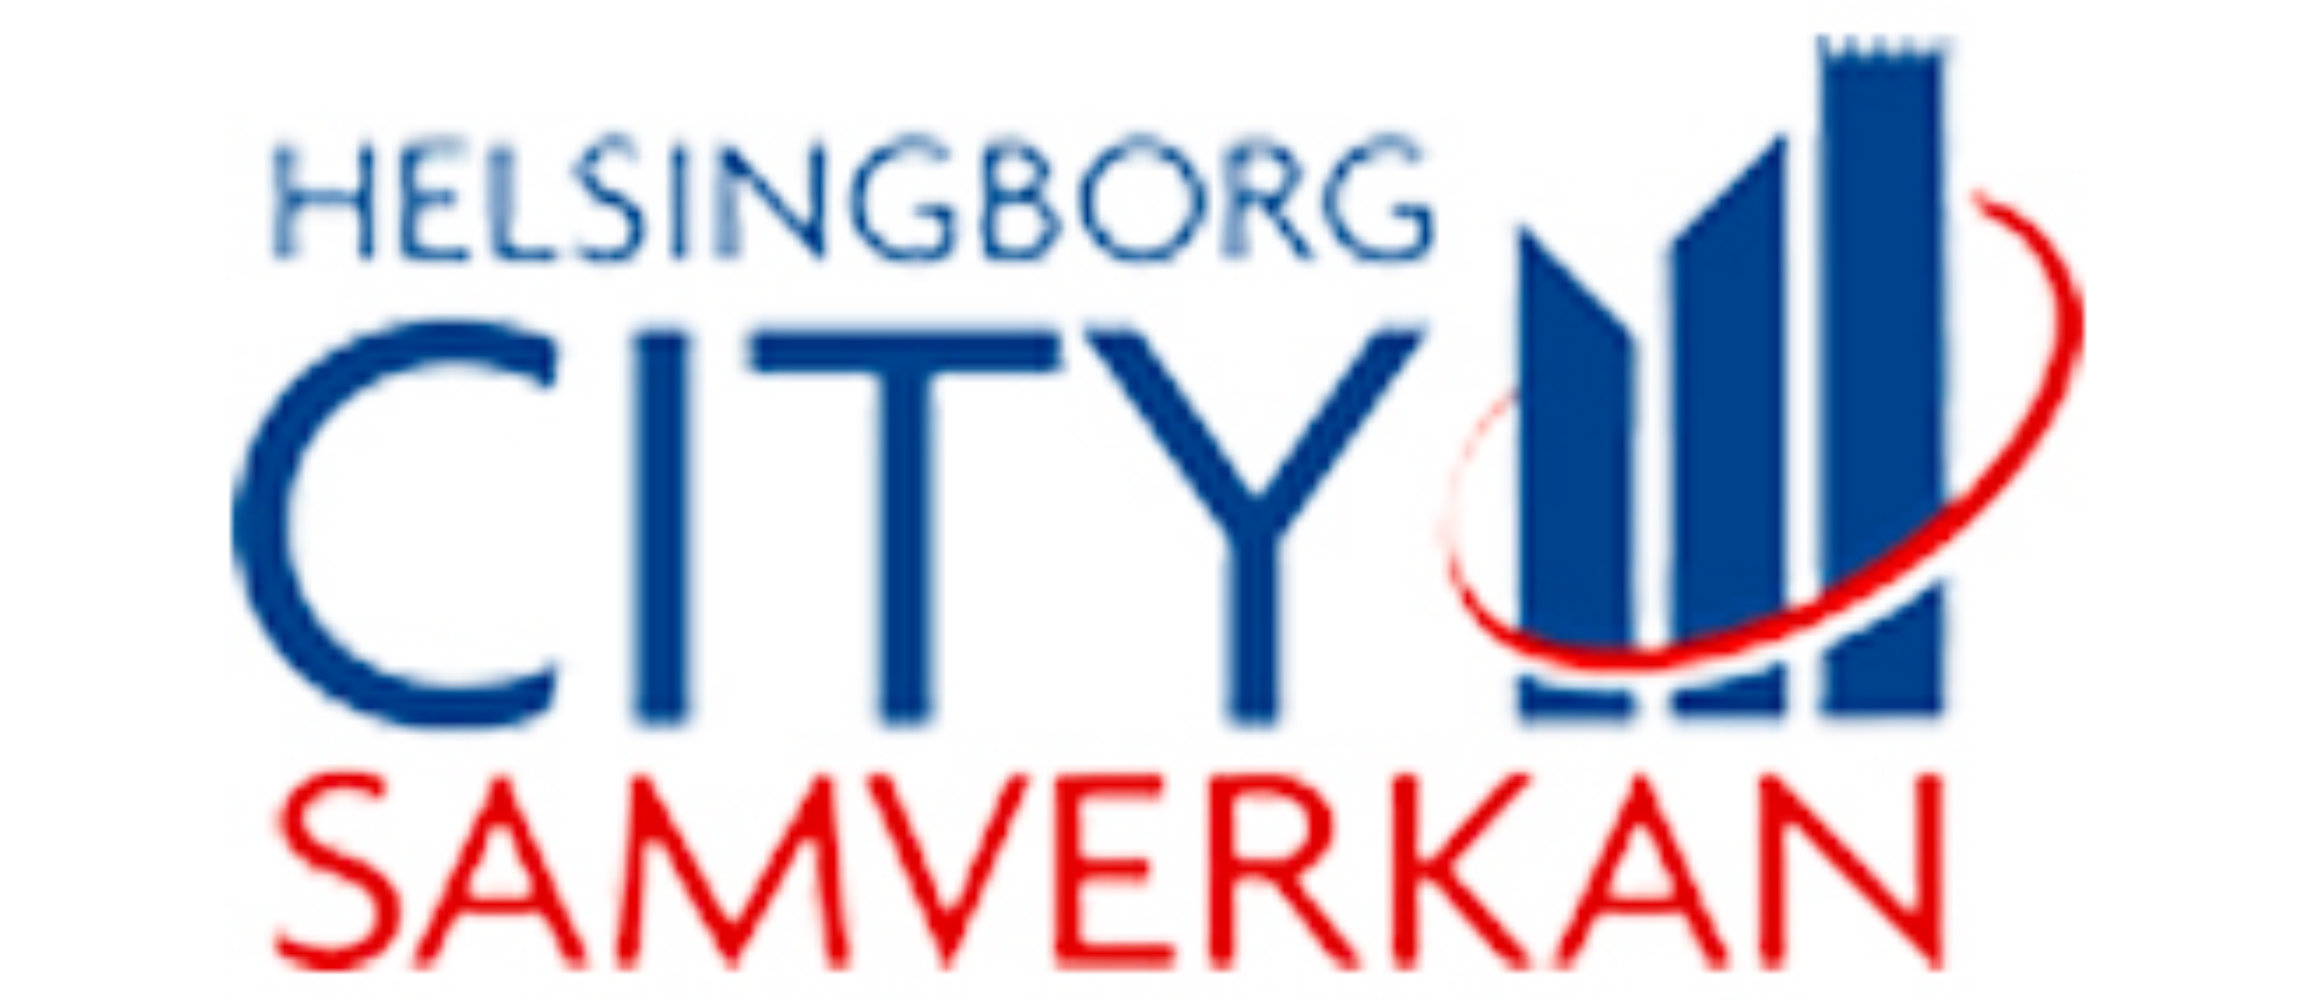 Helsingborg City